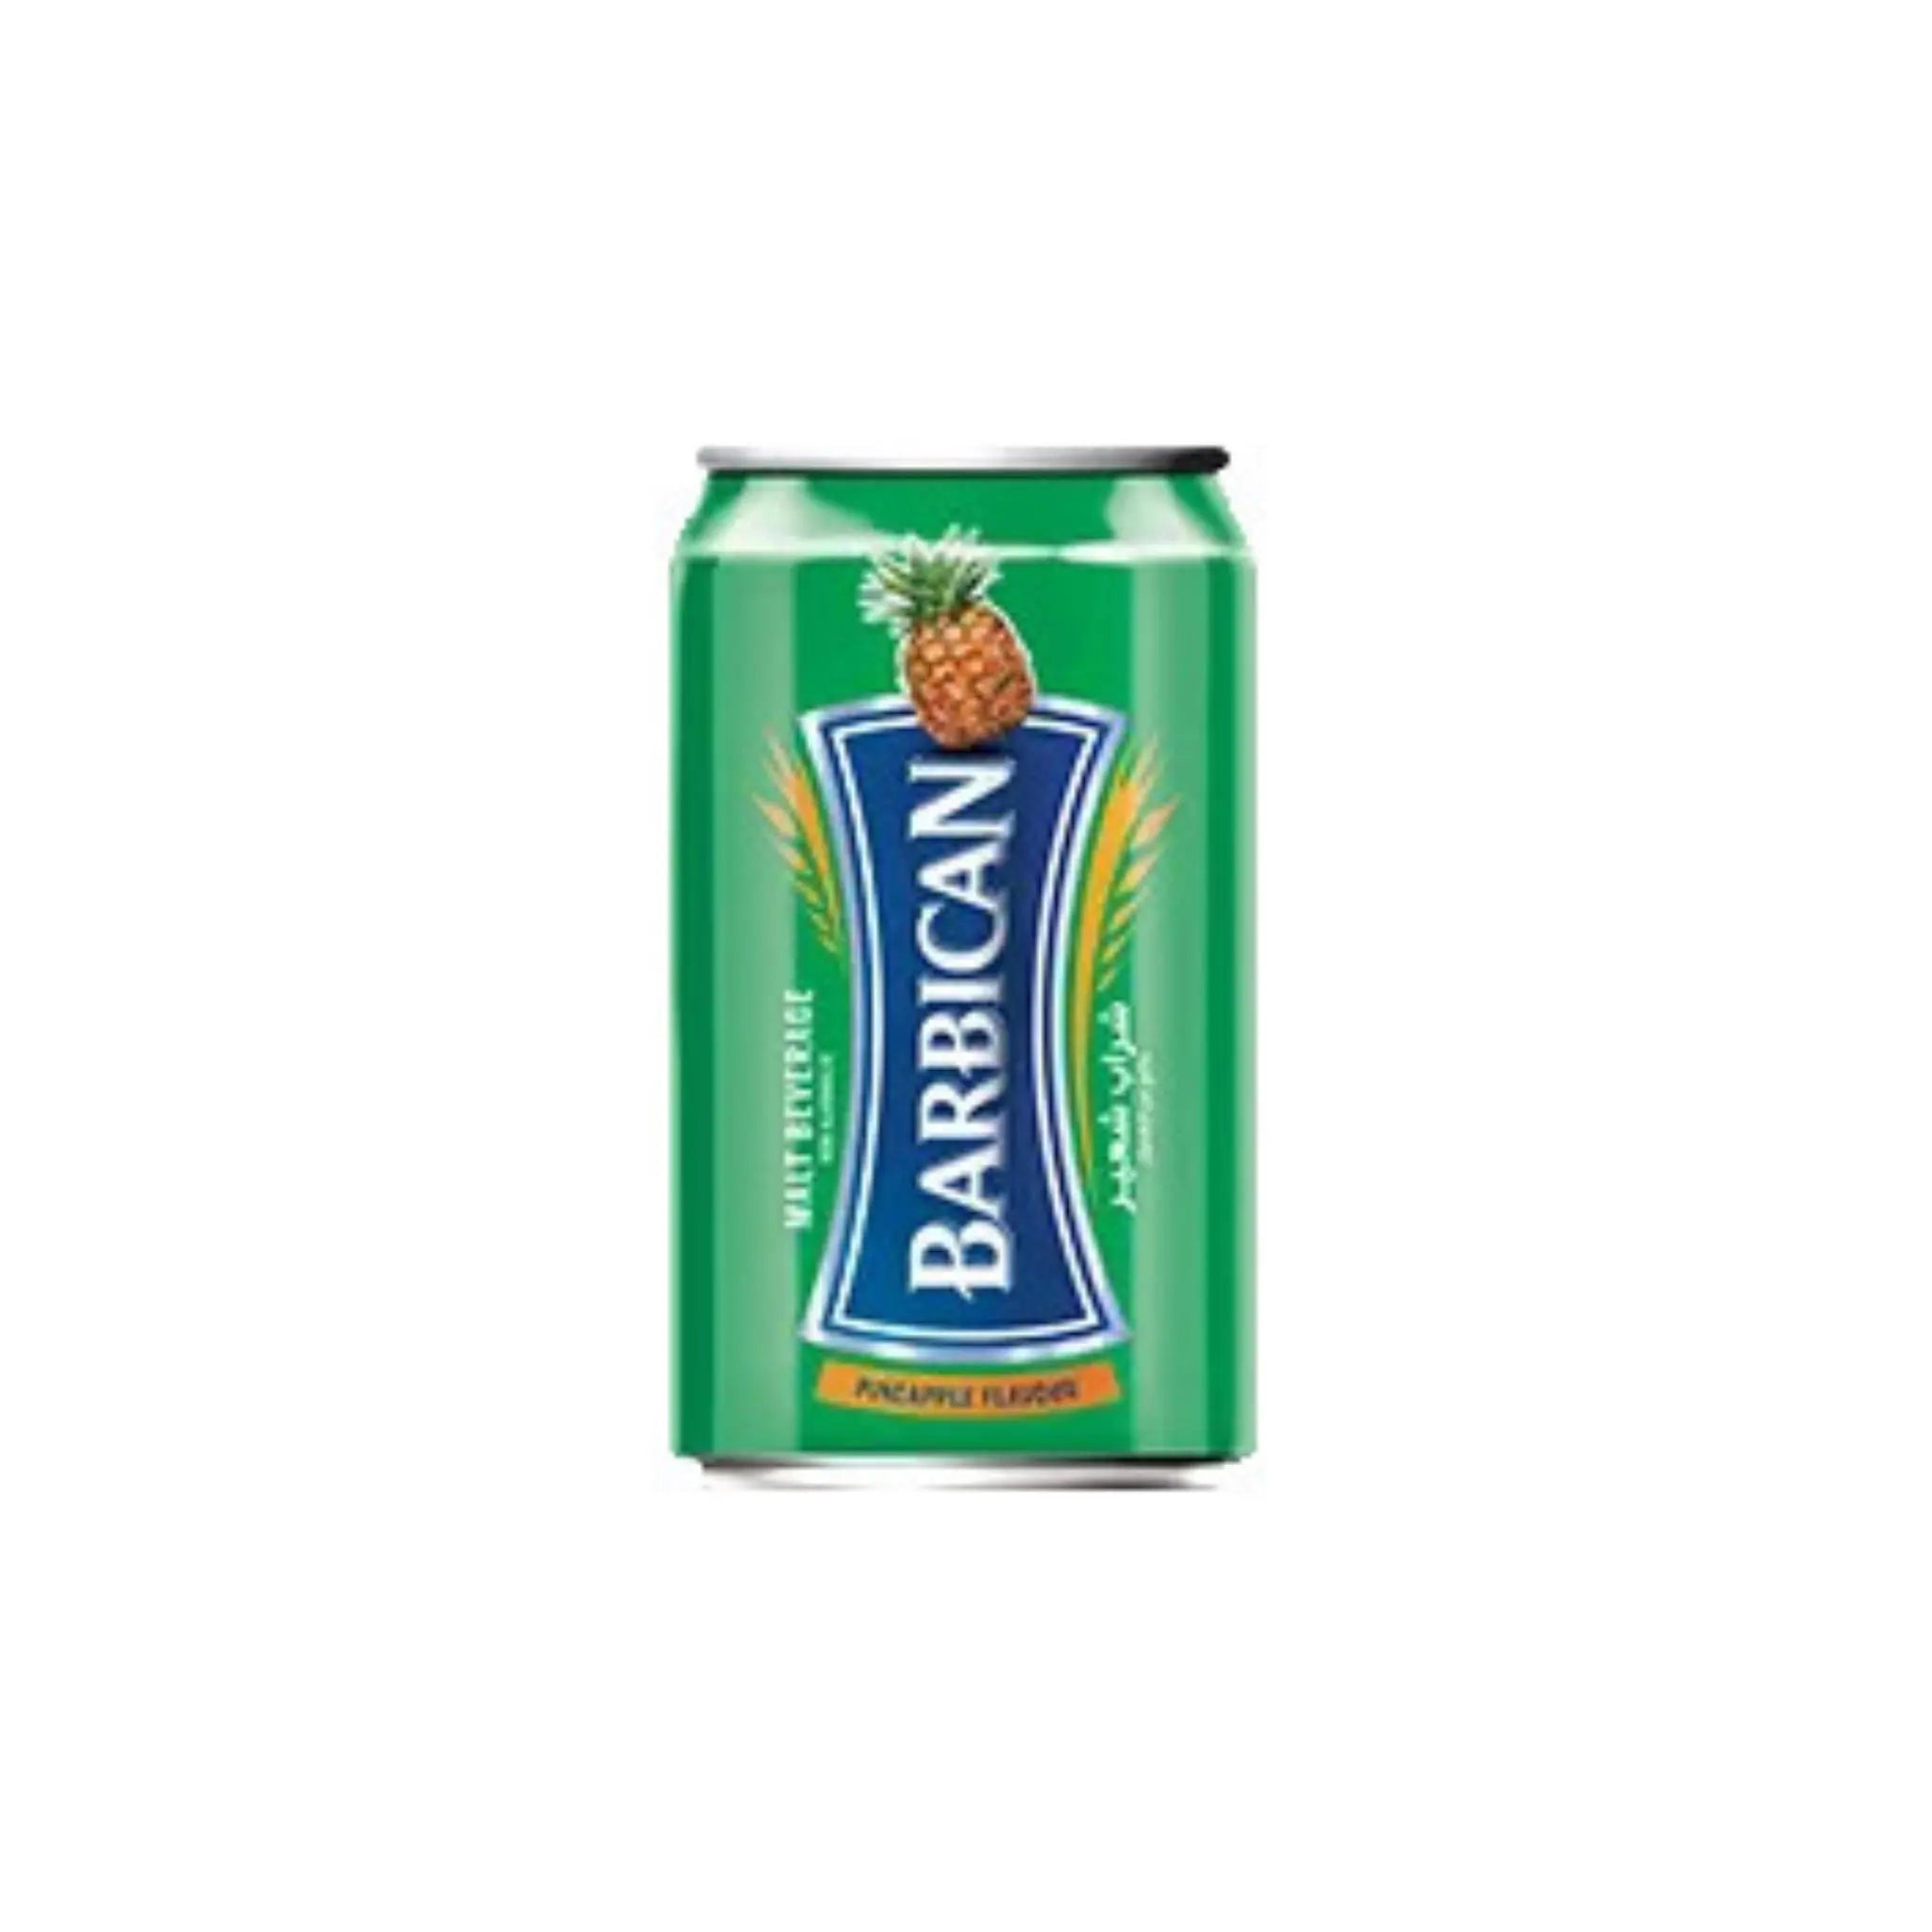 Barbican Pineapple Non-Alcoholic Malt Beverage 330ml Can - 24x330ml (1 carton) Marino.AE